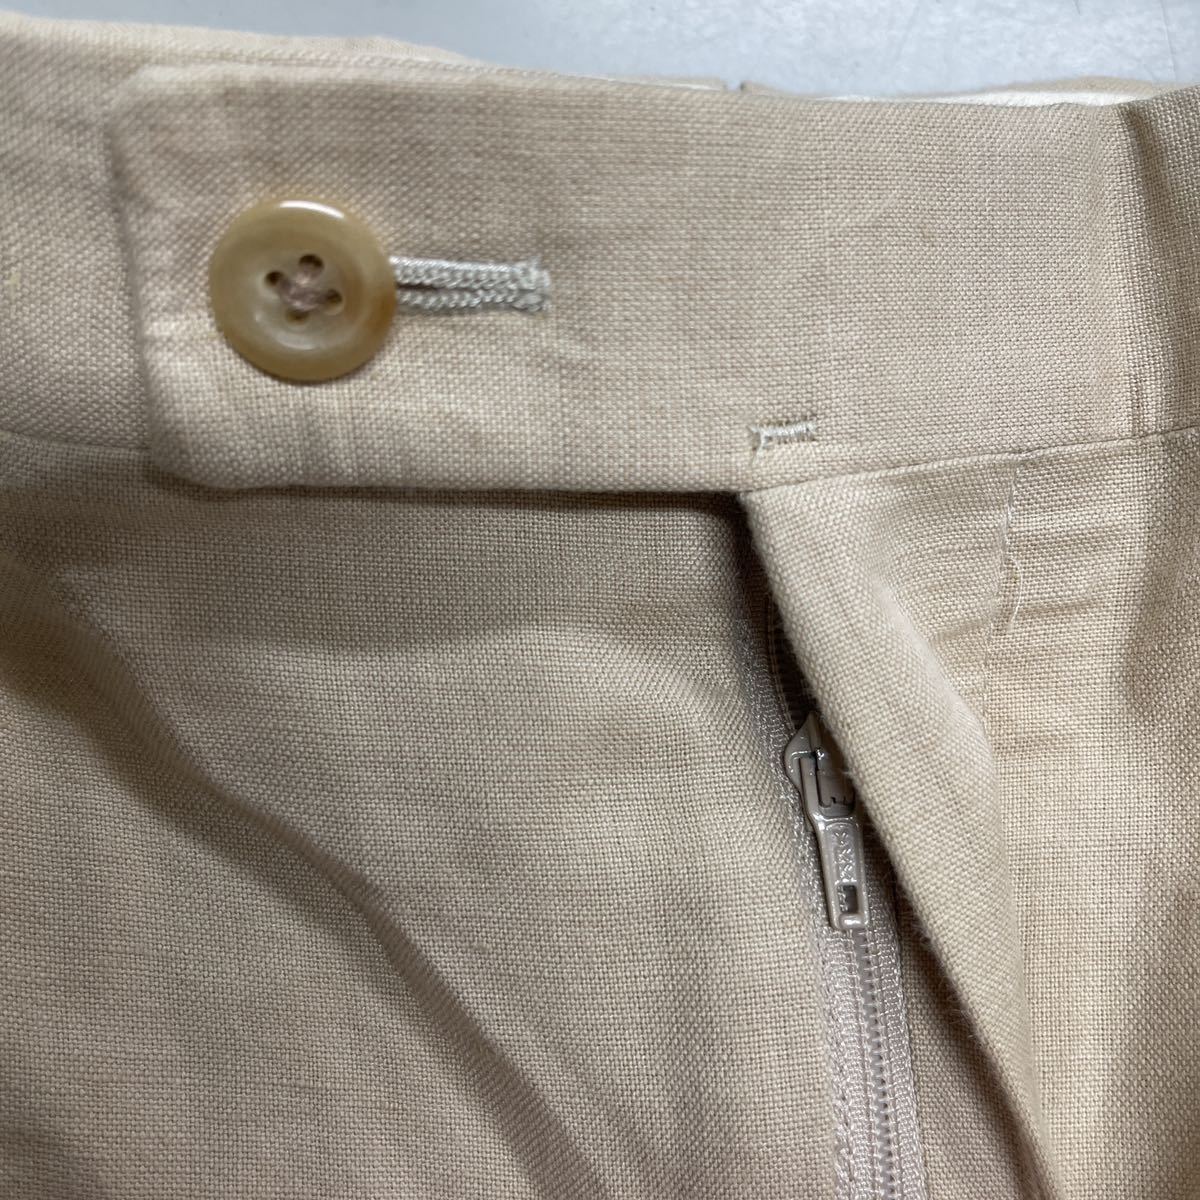 Mila schon Mila Schon cotton flax tuck entering pants cotton hemp men's chinos W85 made in Japan MADE IN JAPAN